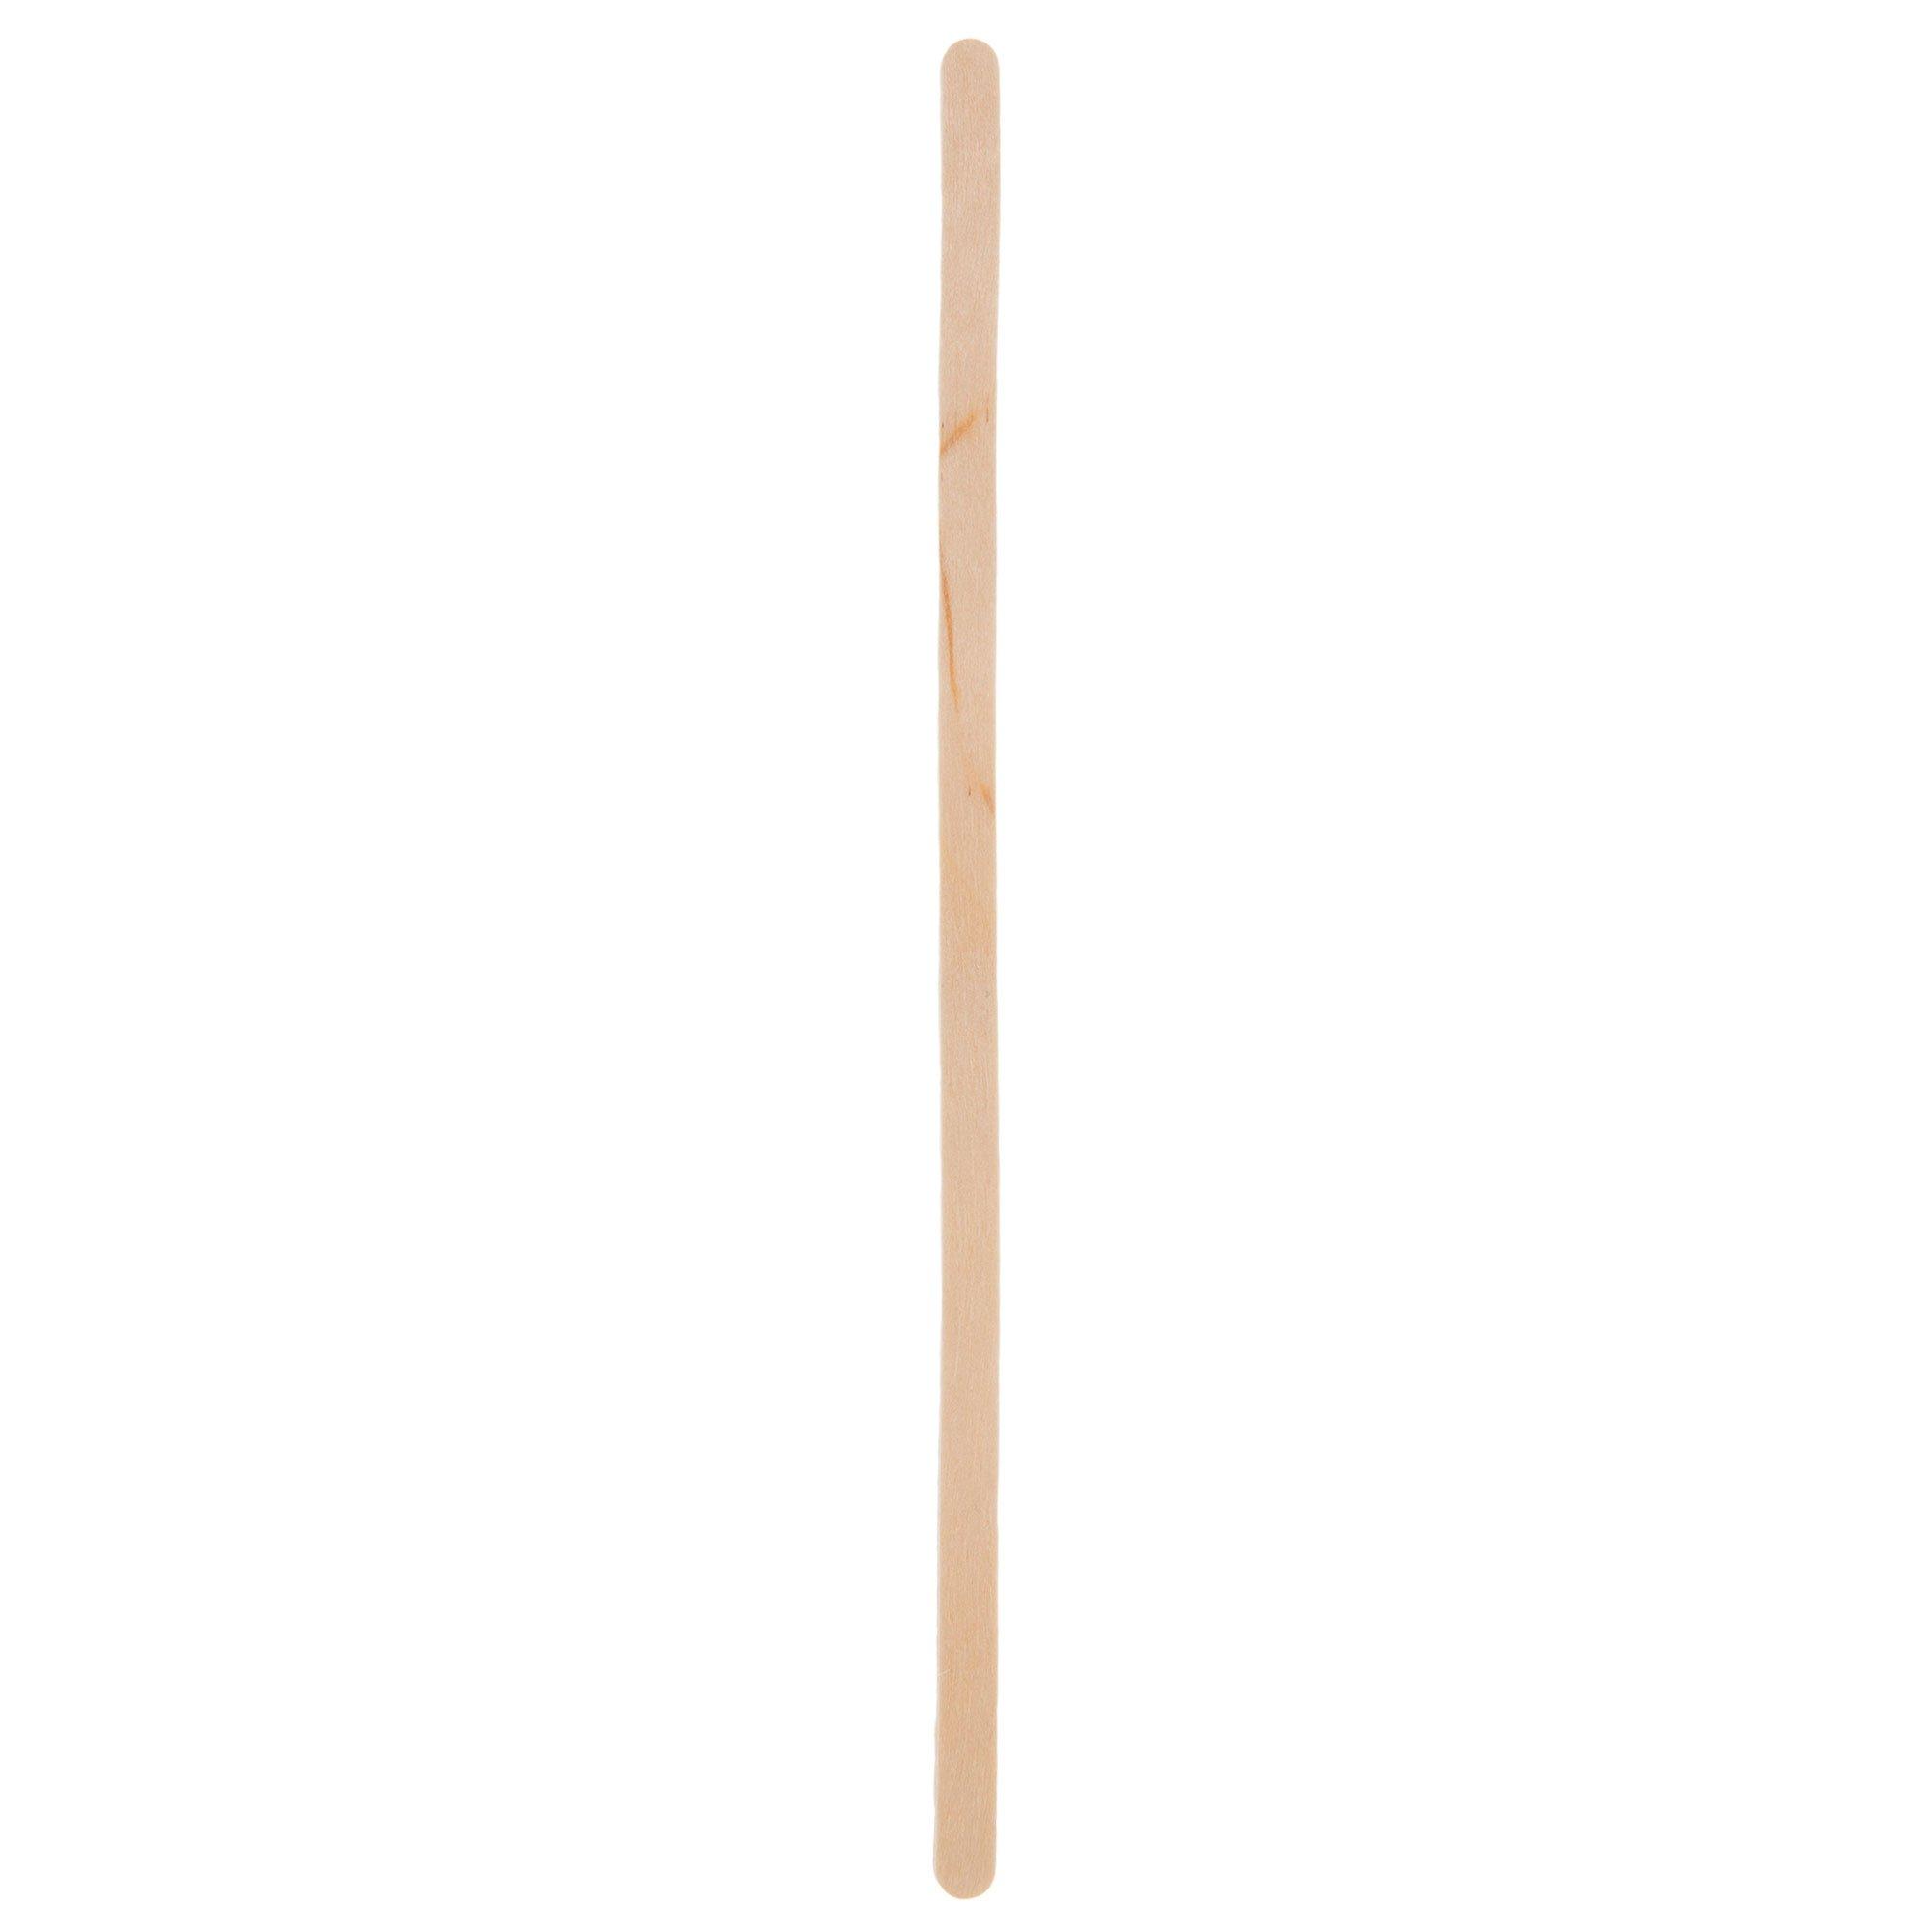 Thin Craft Sticks 5-3/4X1/4 75/Pkg 